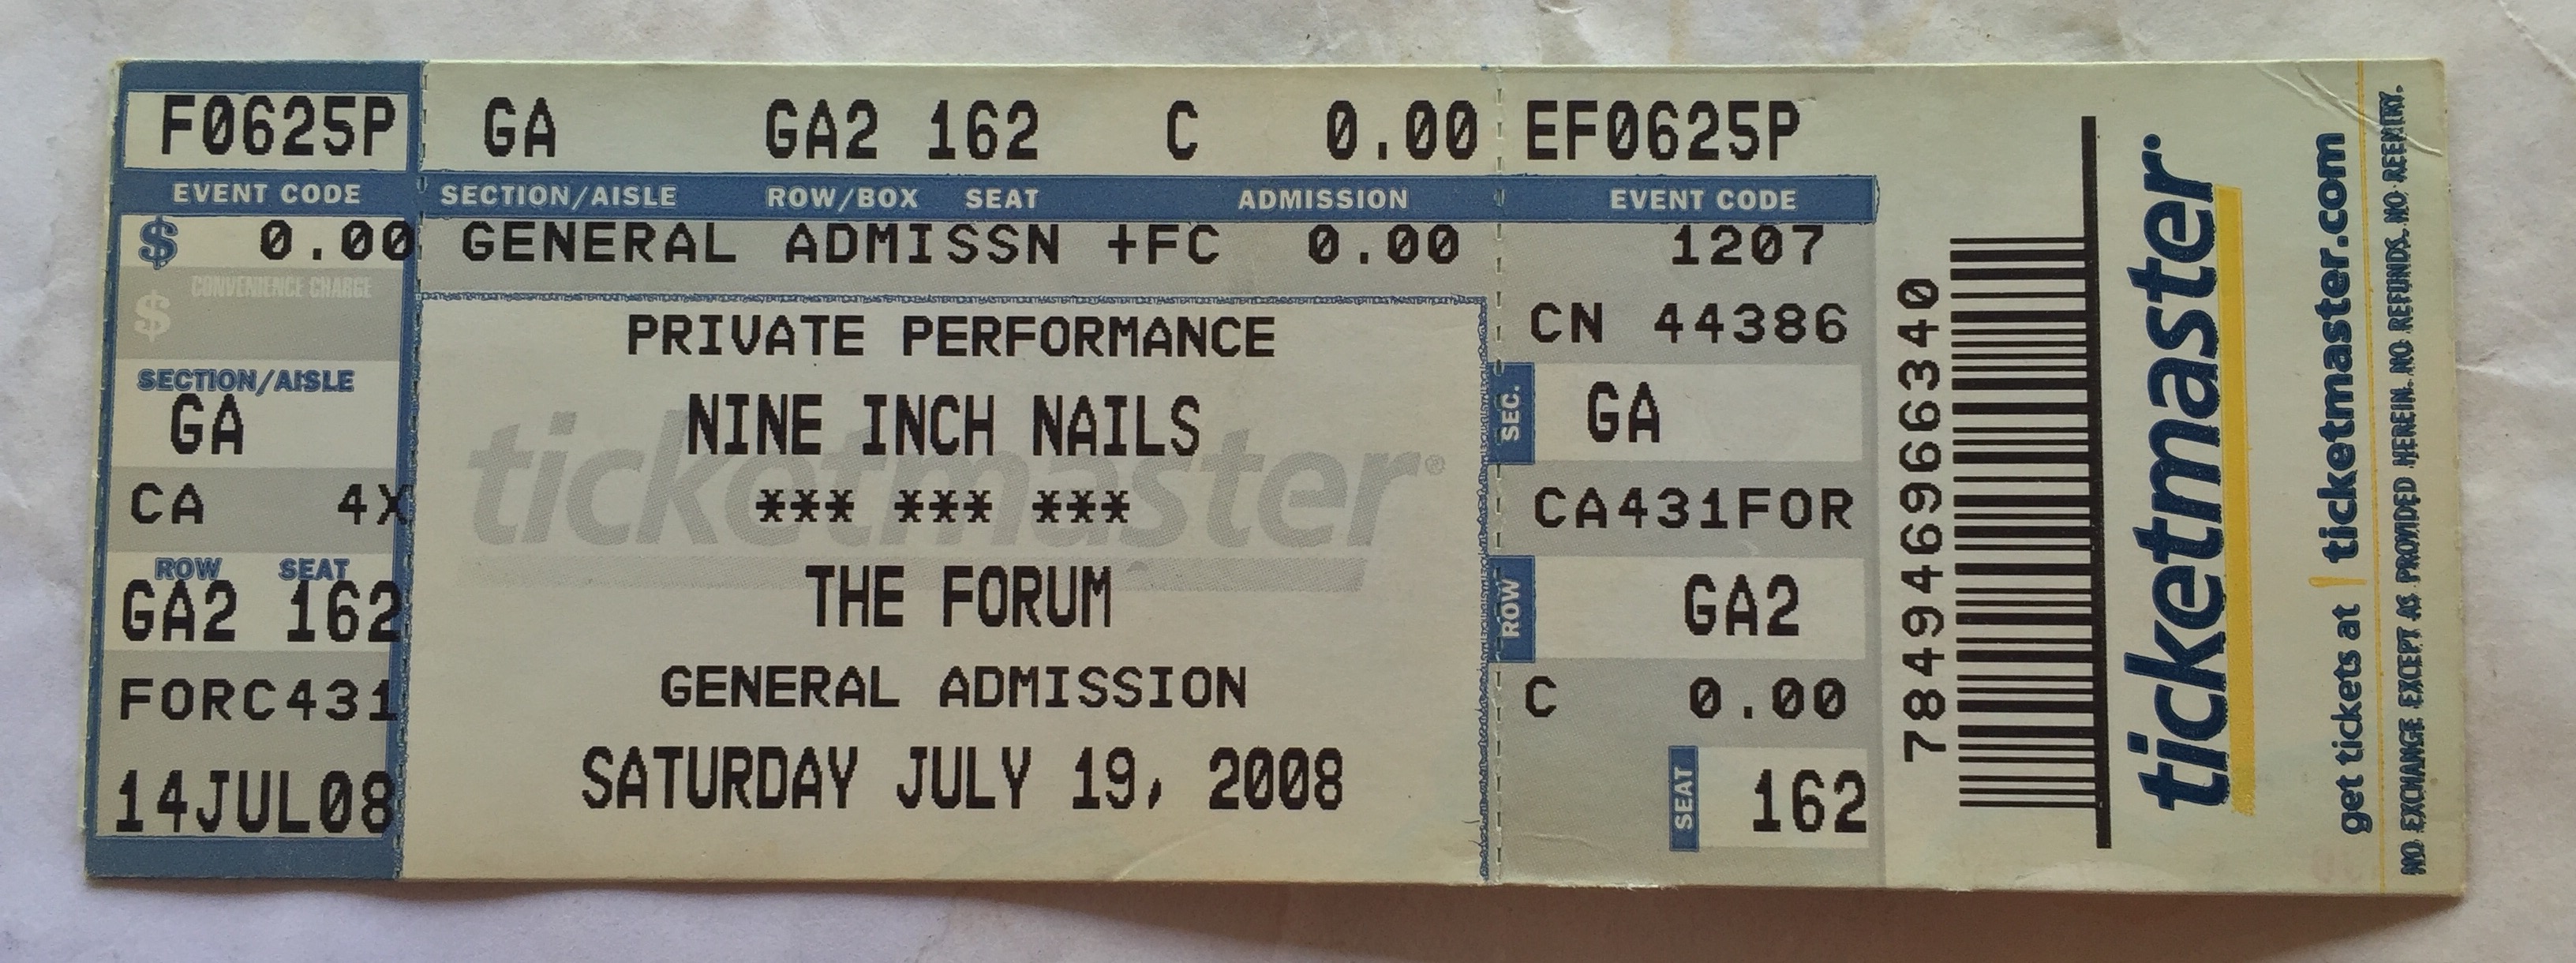 2008/07/19 Ticket